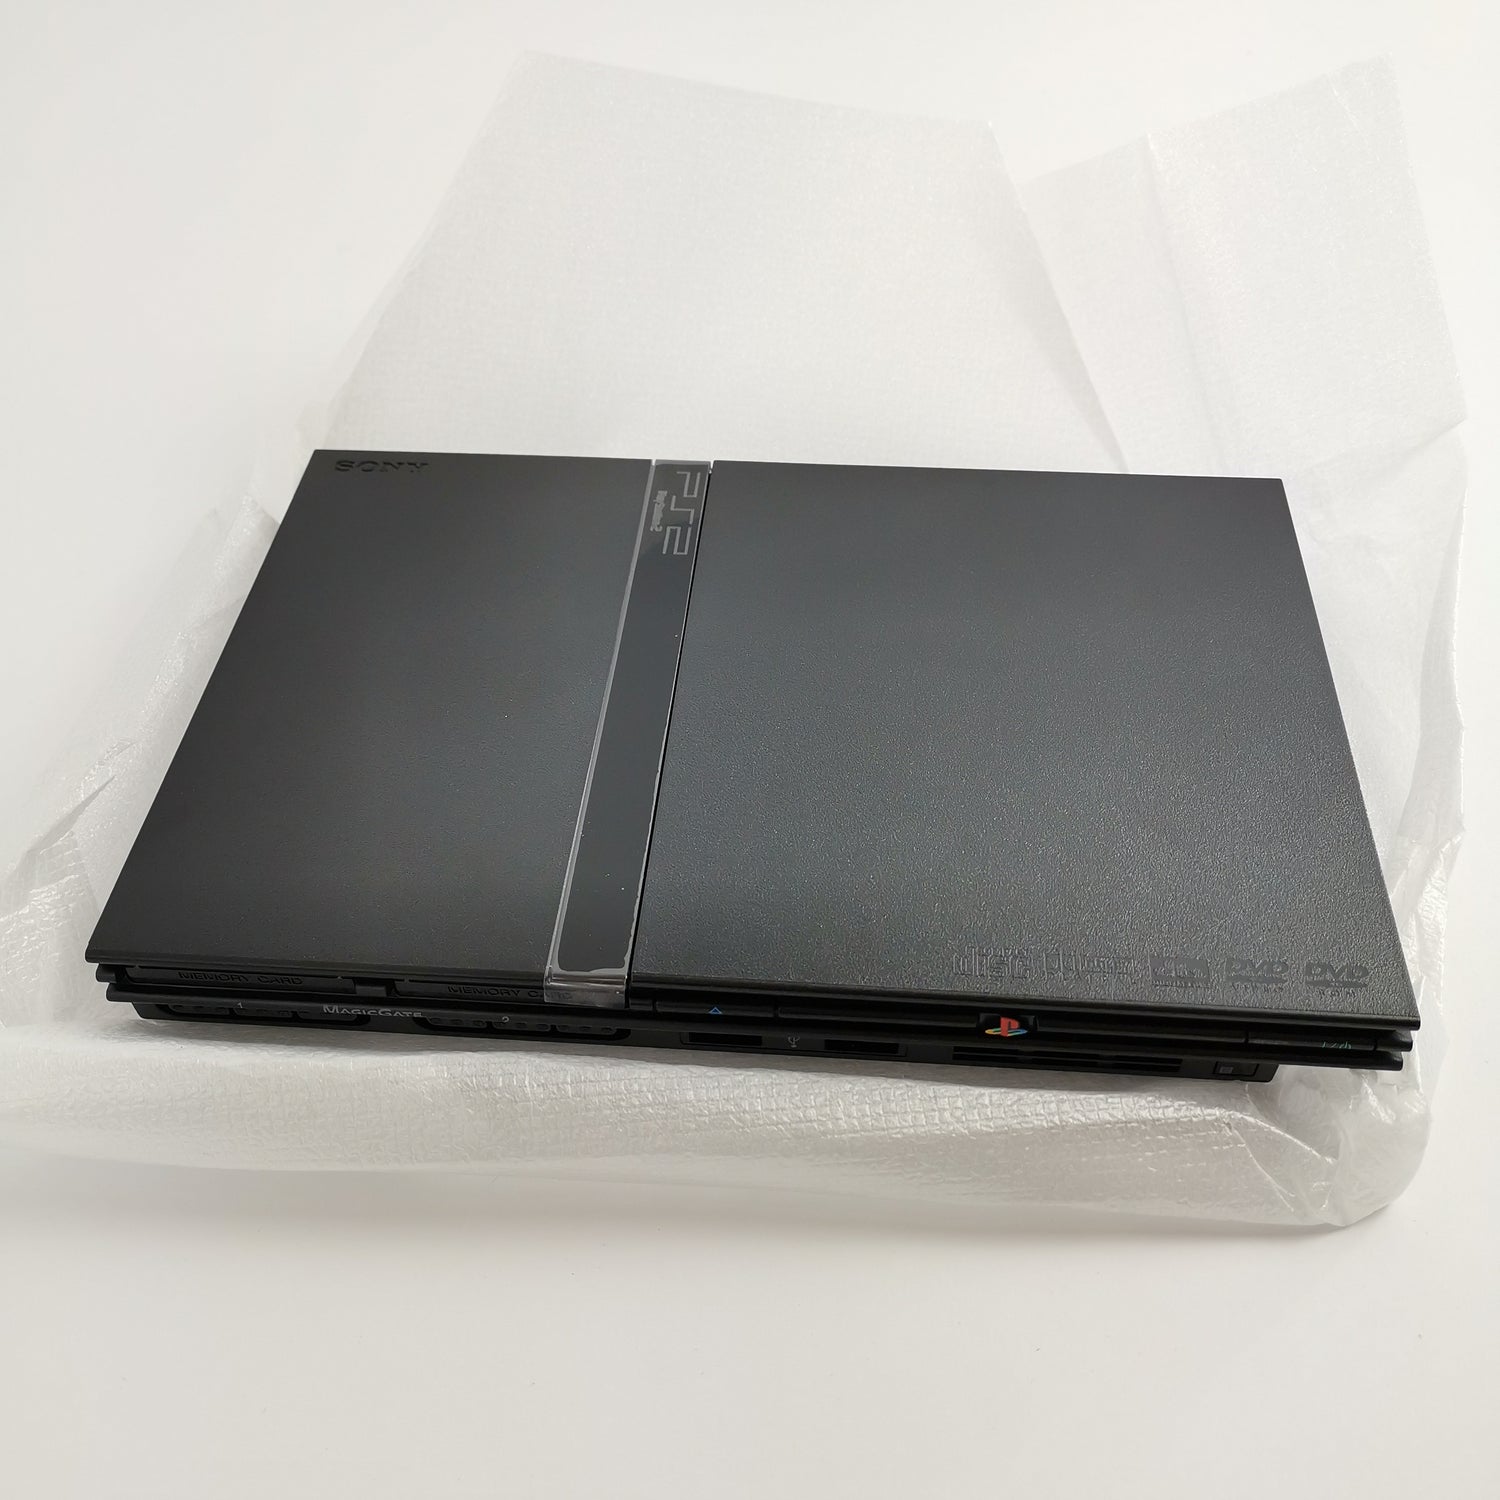 Sony Playstation 2 Slim Konsole Schwarz / black | PS2 Console - NEU NEW OVP